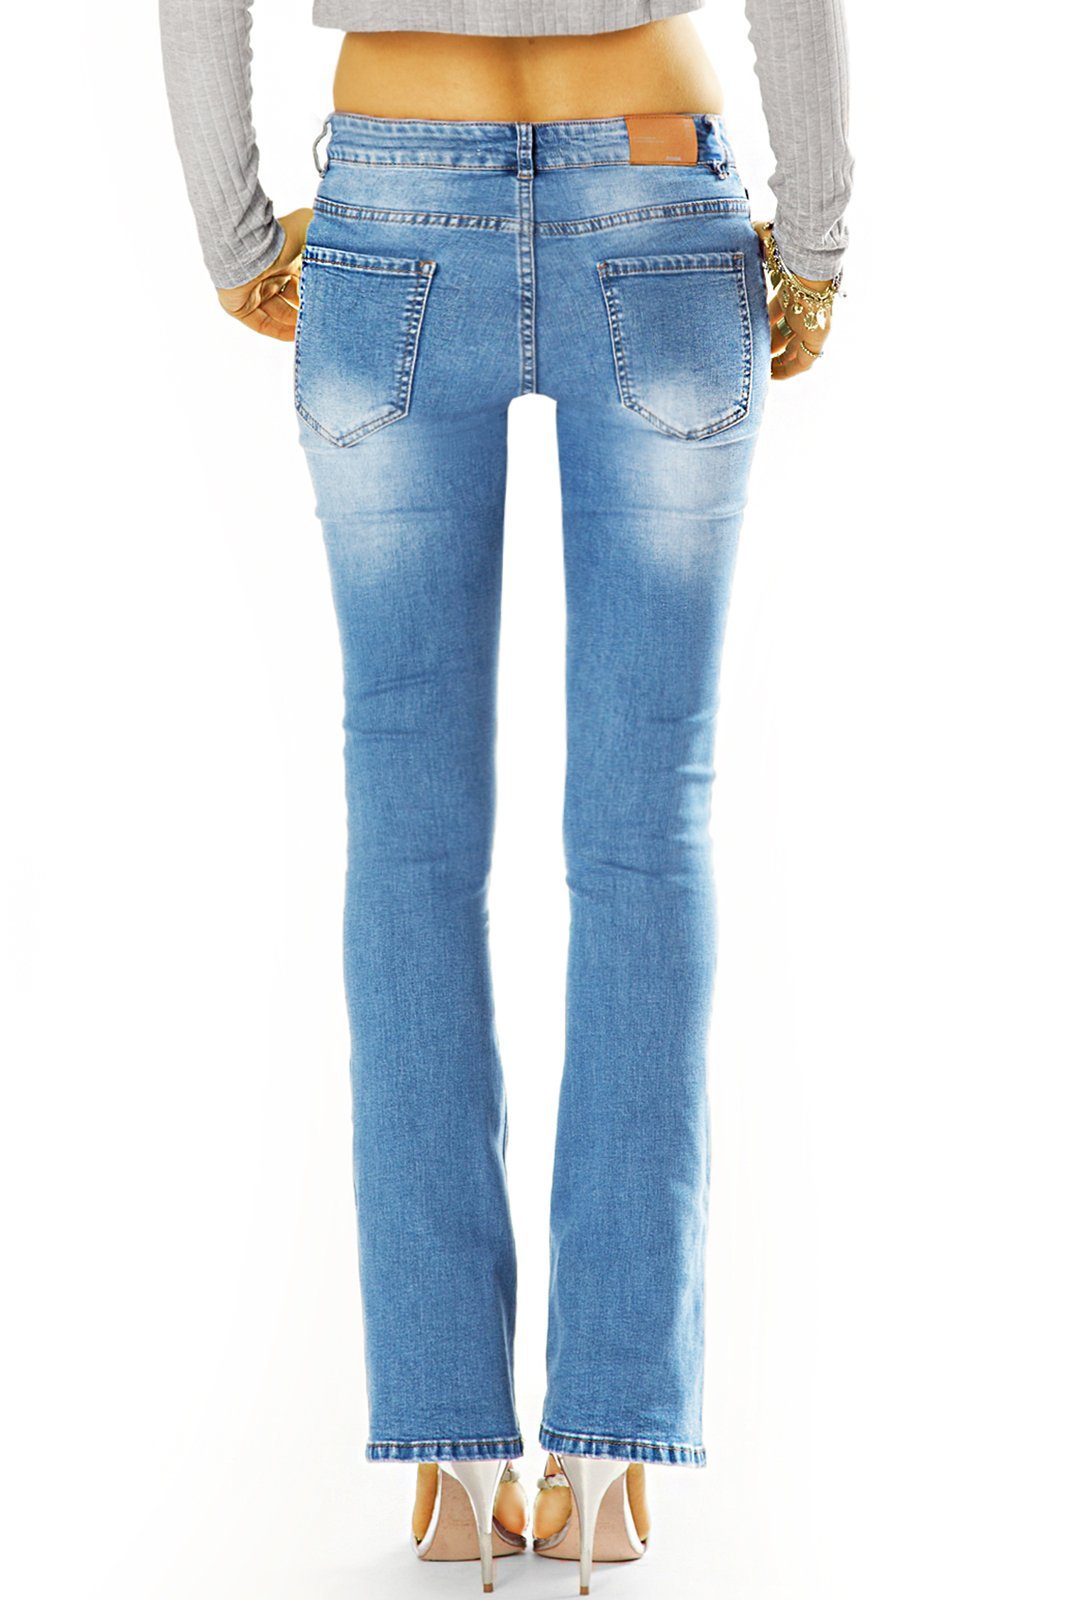 Stretch-Anteil, mit Bootcut-Jeans be - Hose Medium Waist Bootcut 5-Pocket-Style styled Damen Jeans - j13L Schlagjeans